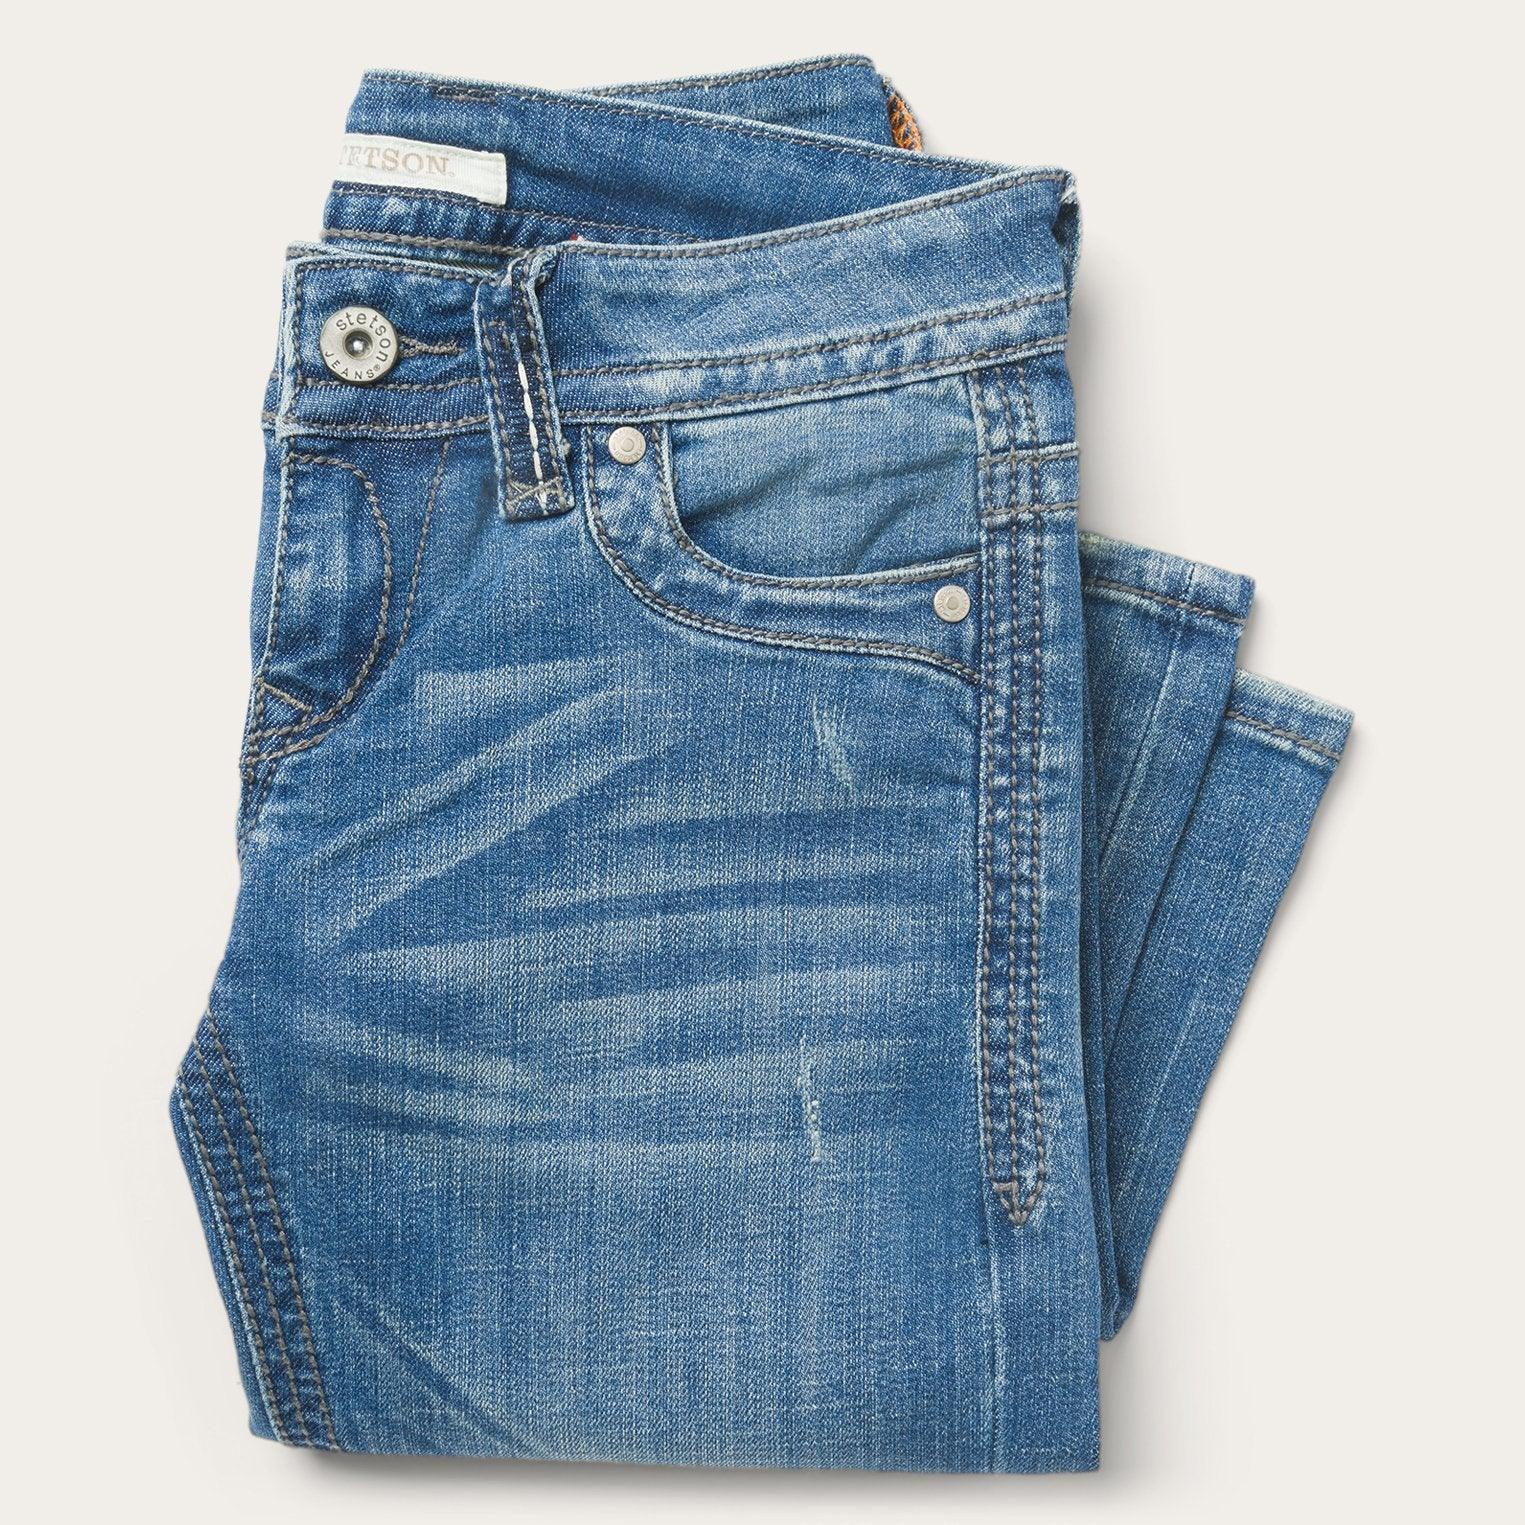 Stetson 818 Fit Light Wash Jeans - Flyclothing LLC